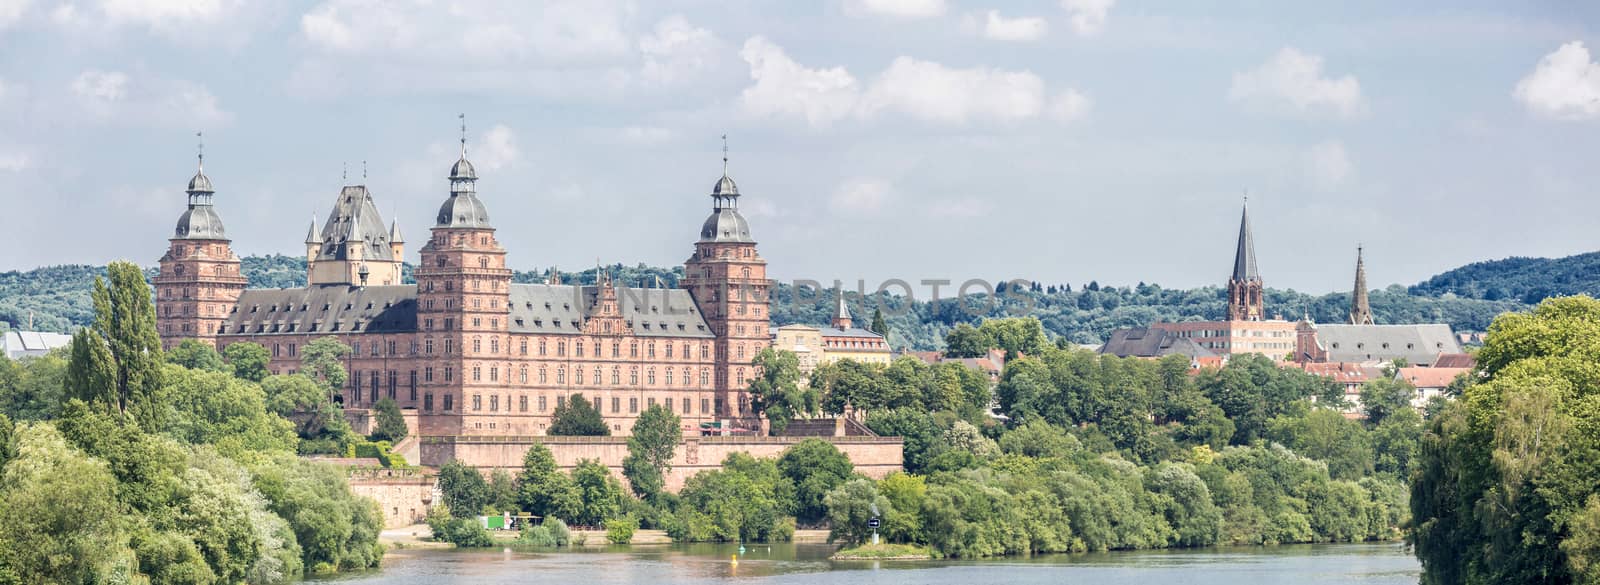 Johannisburg palace panorama by vichie81